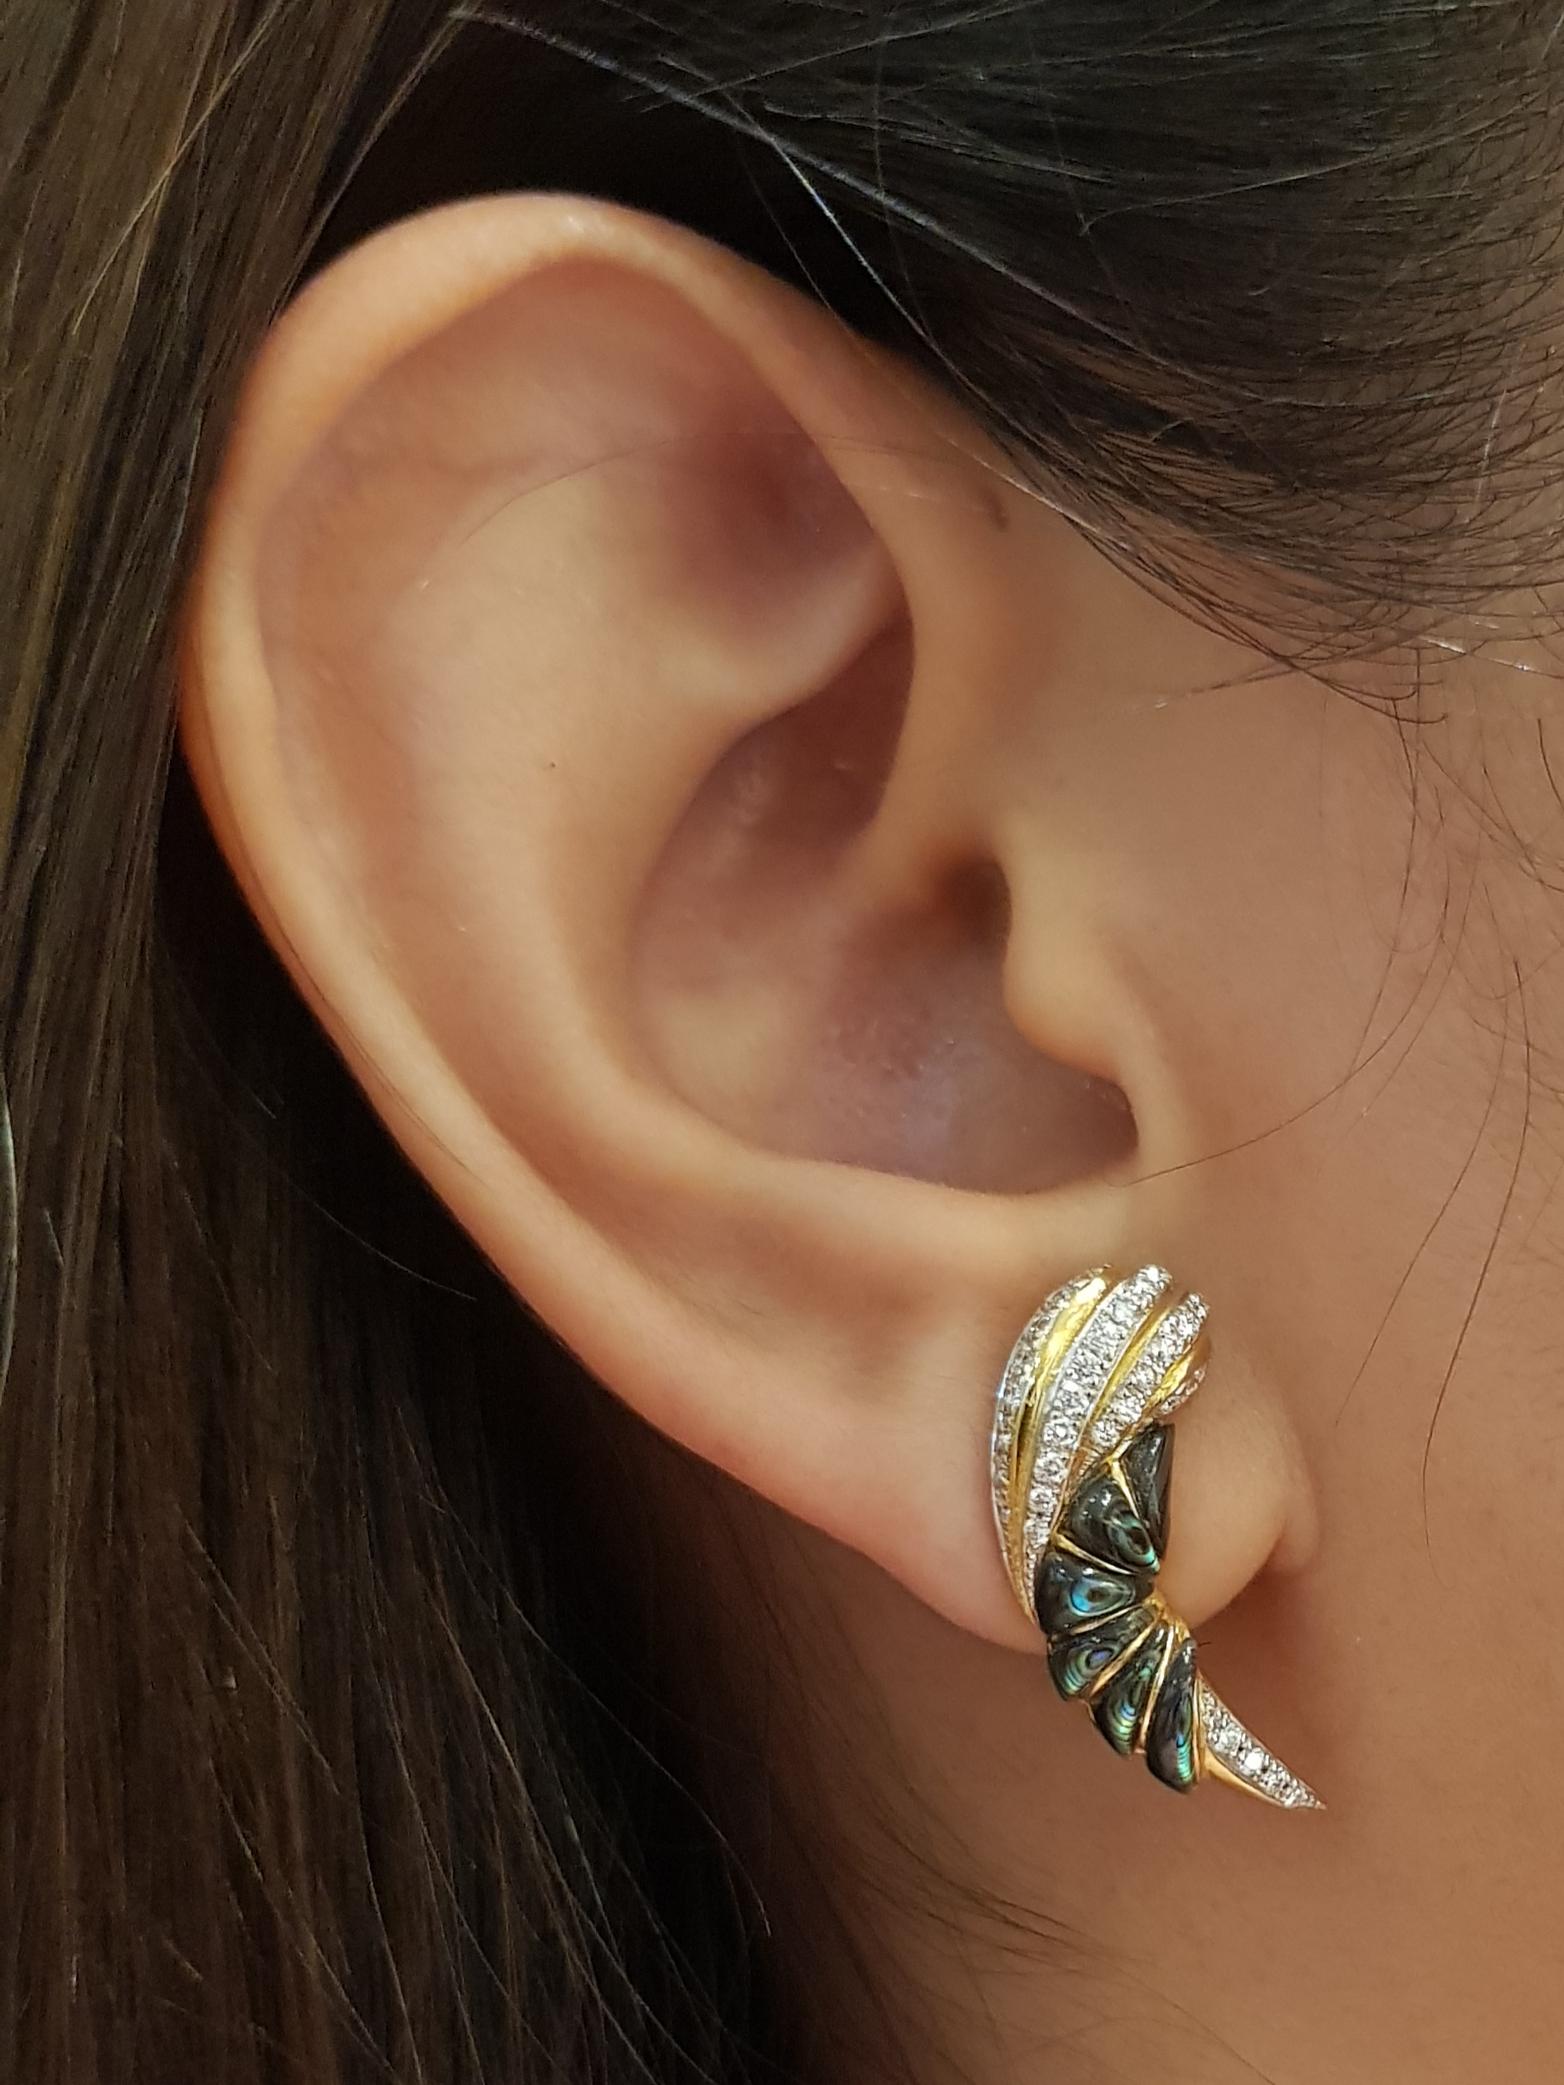 Diamond 0.56 carat Earrings set in 18 Karat Gold Settings

Width:  1.0 cm 
Length:  2.5 cm
Total Weight: 8.04 grams

